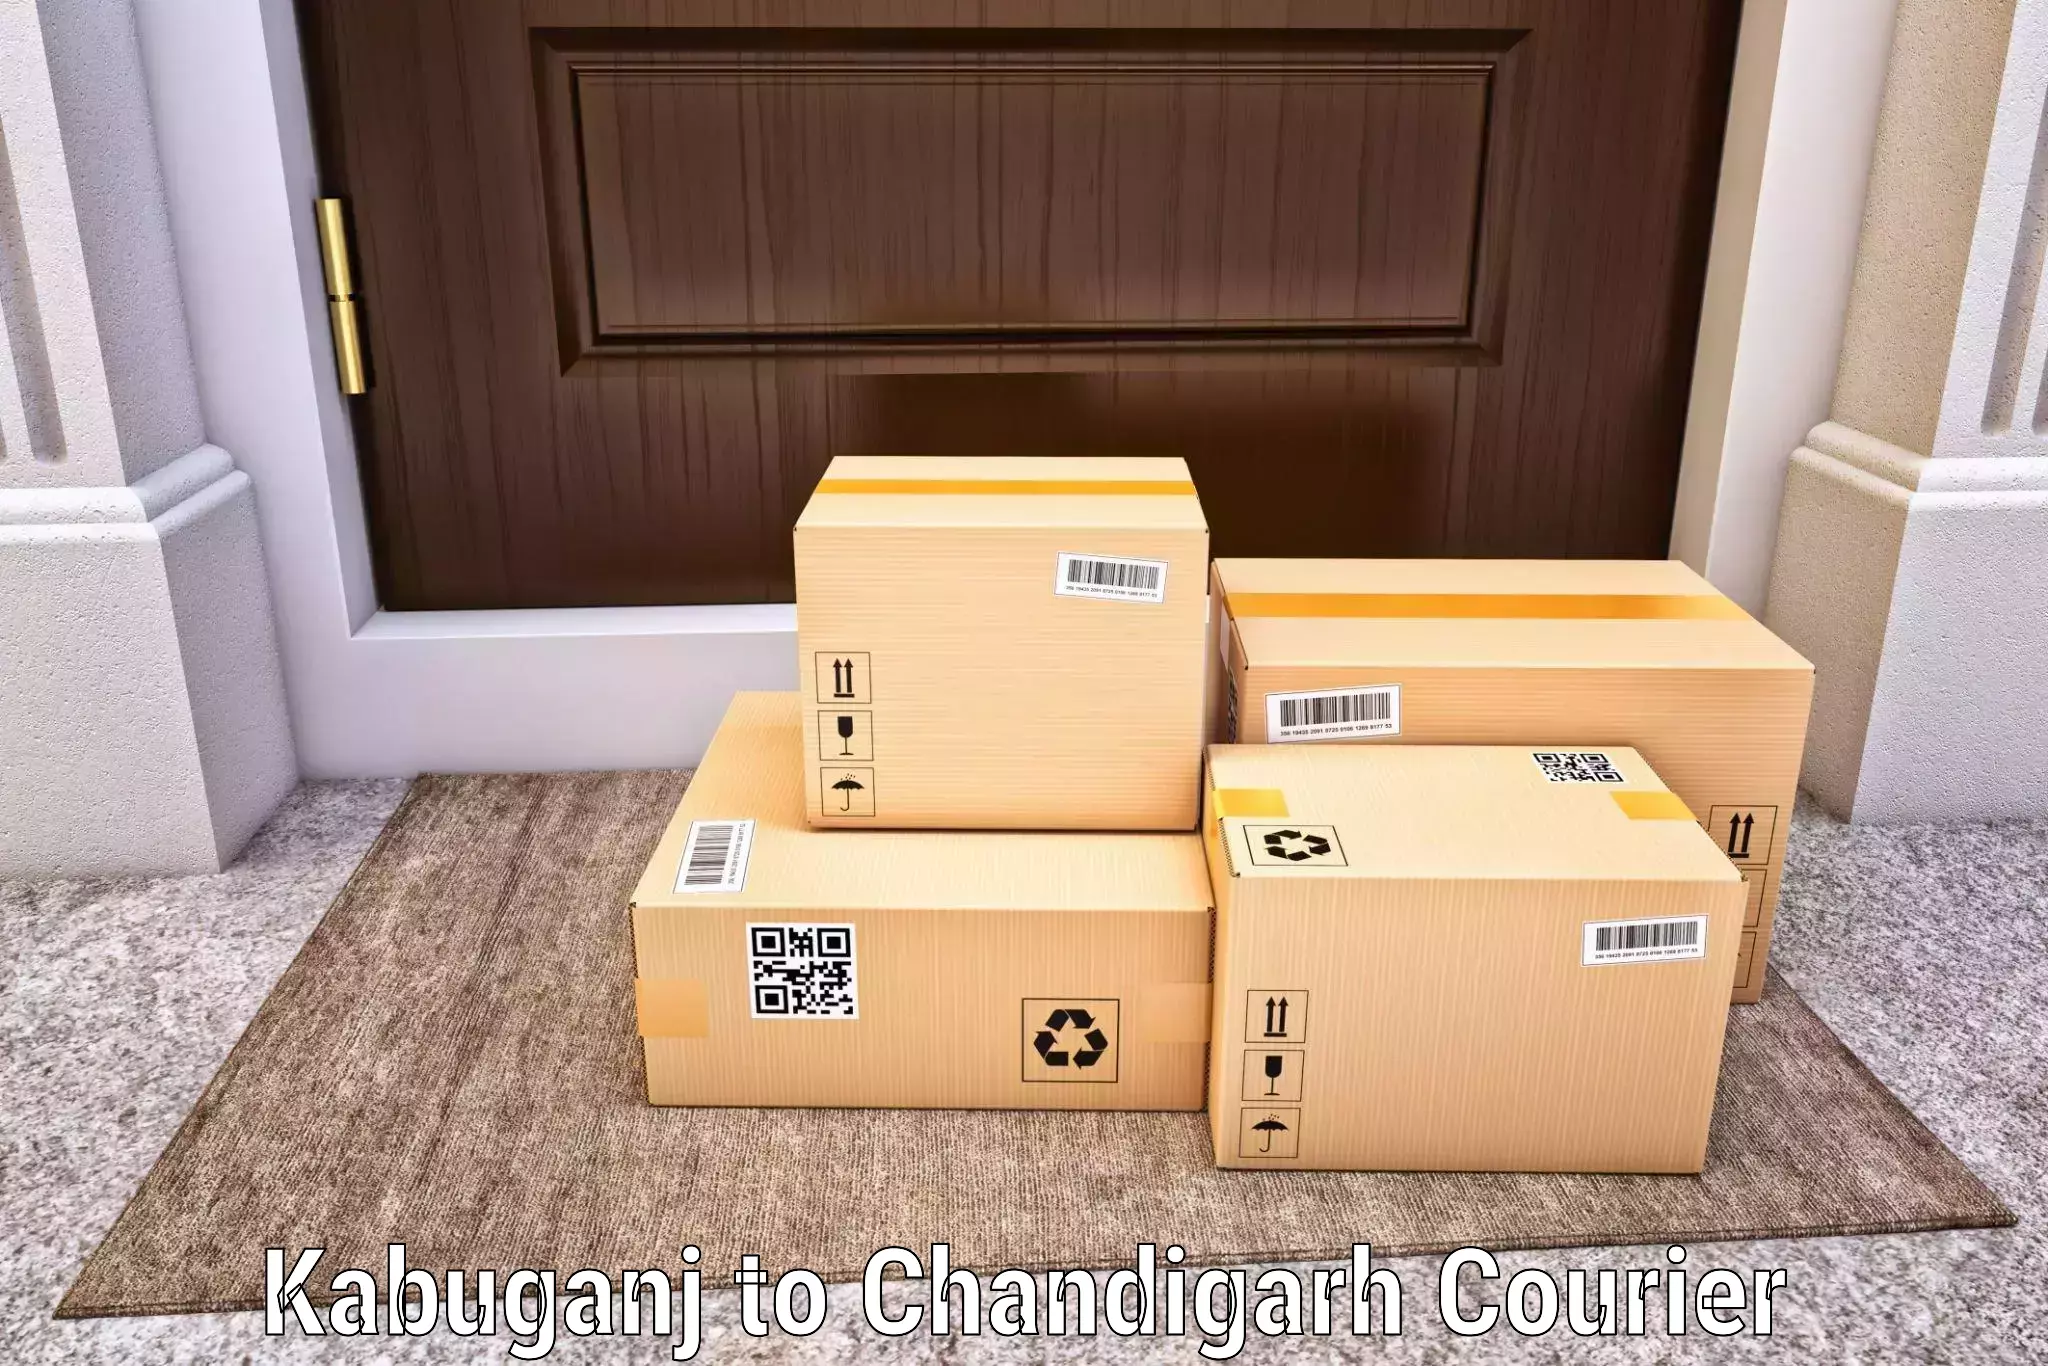 Efficient shipping operations Kabuganj to Chandigarh